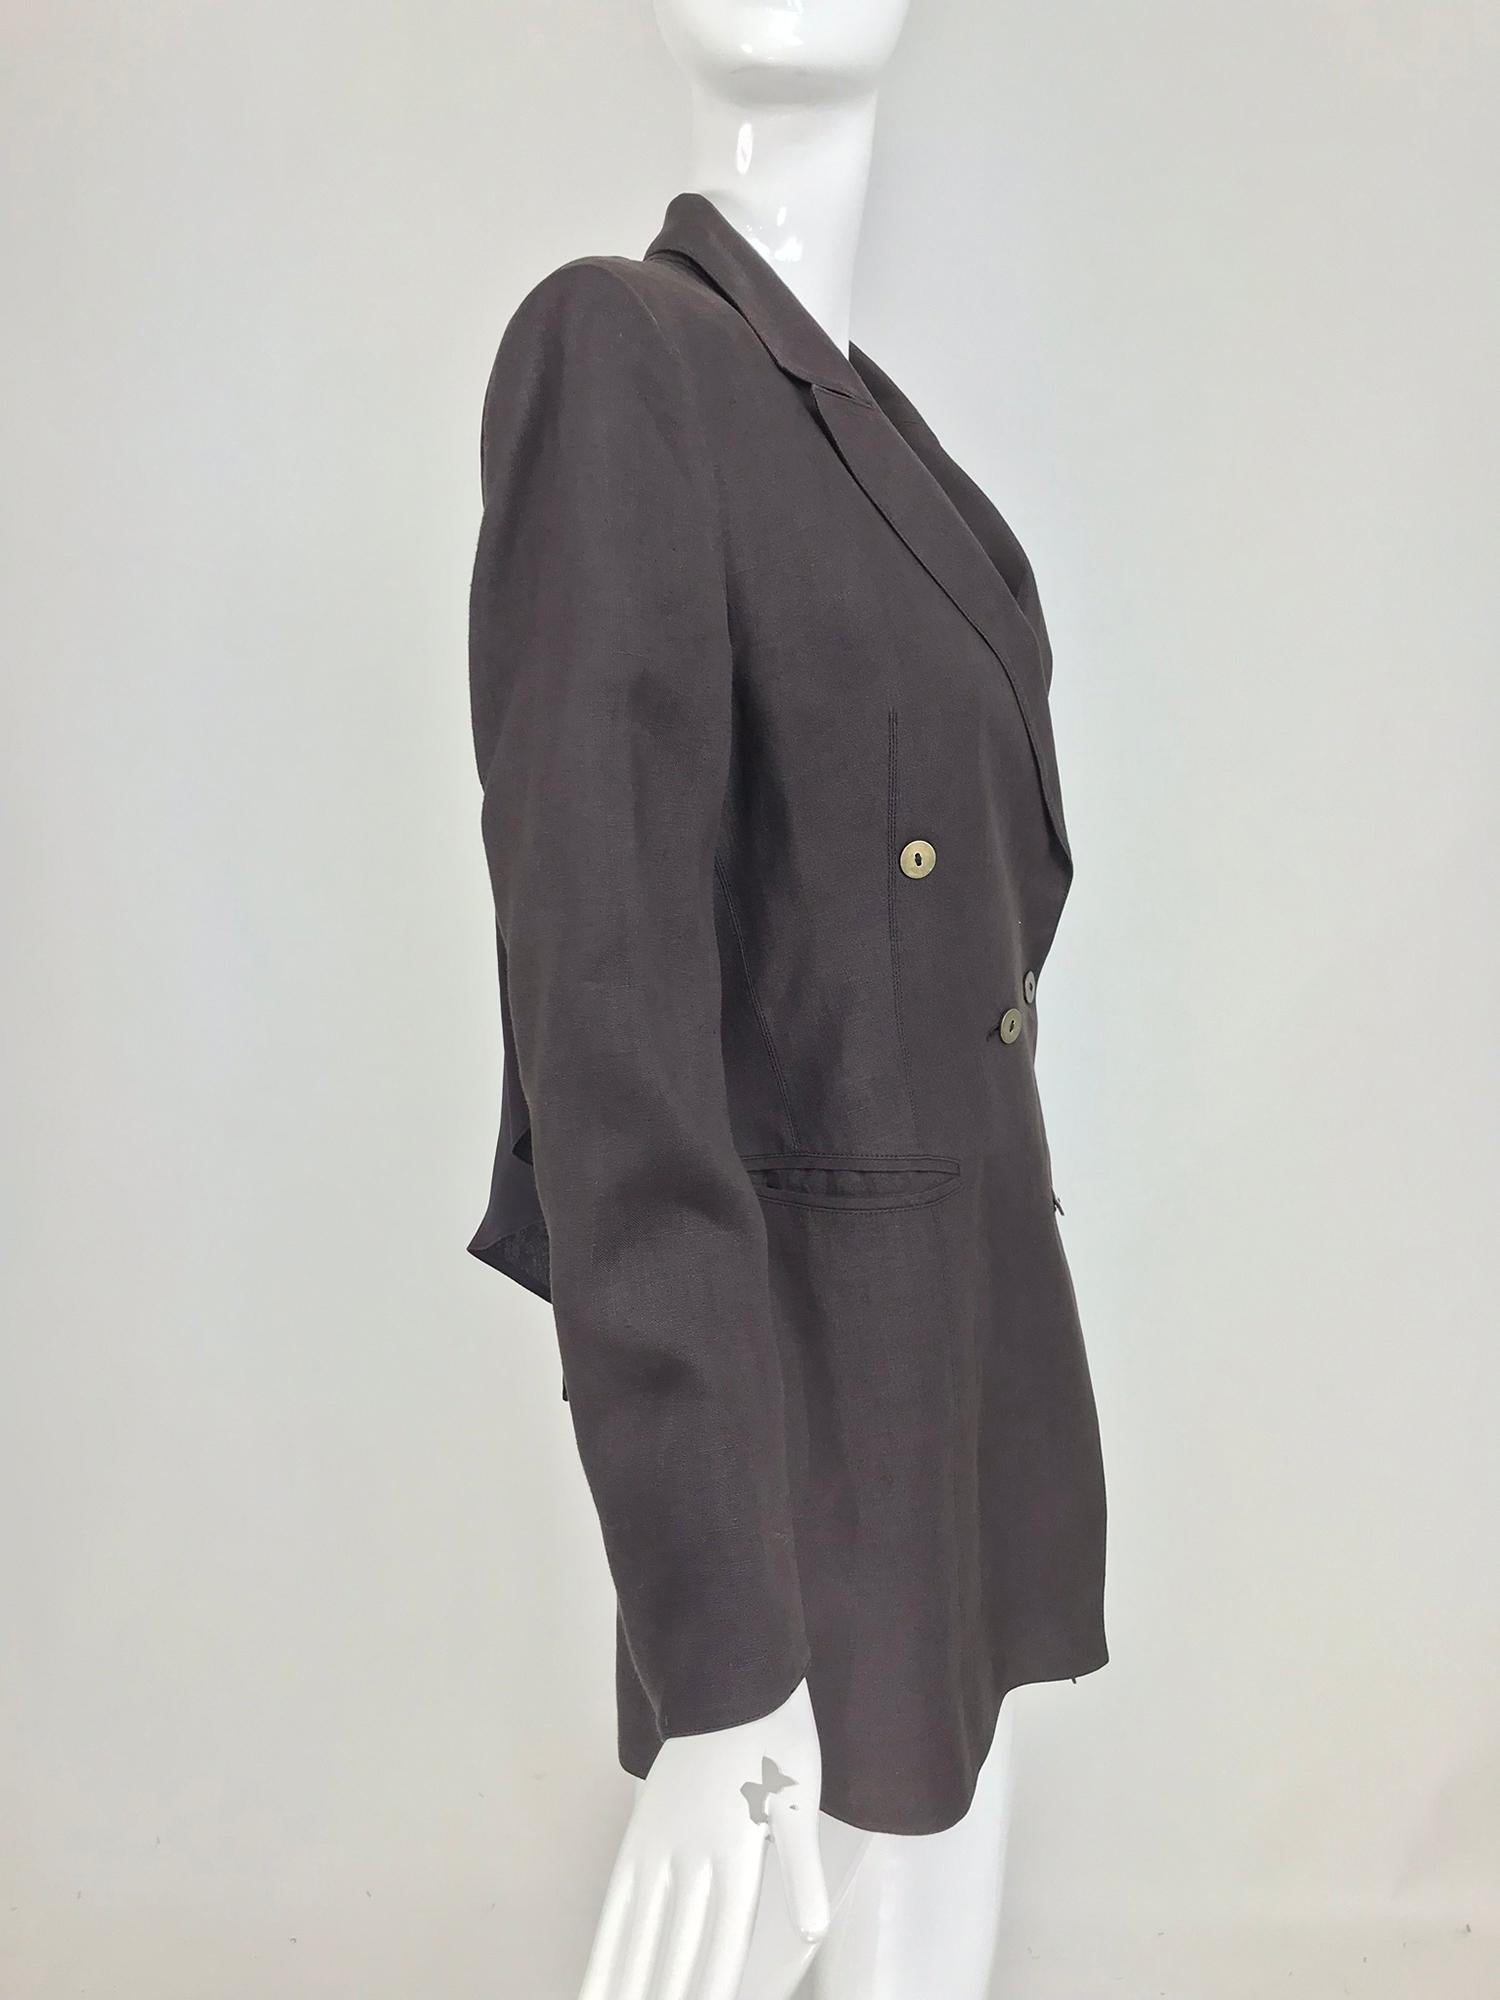 Women's Claude Montana Brown Linen Drape Open Back Jacket 1980s For Sale